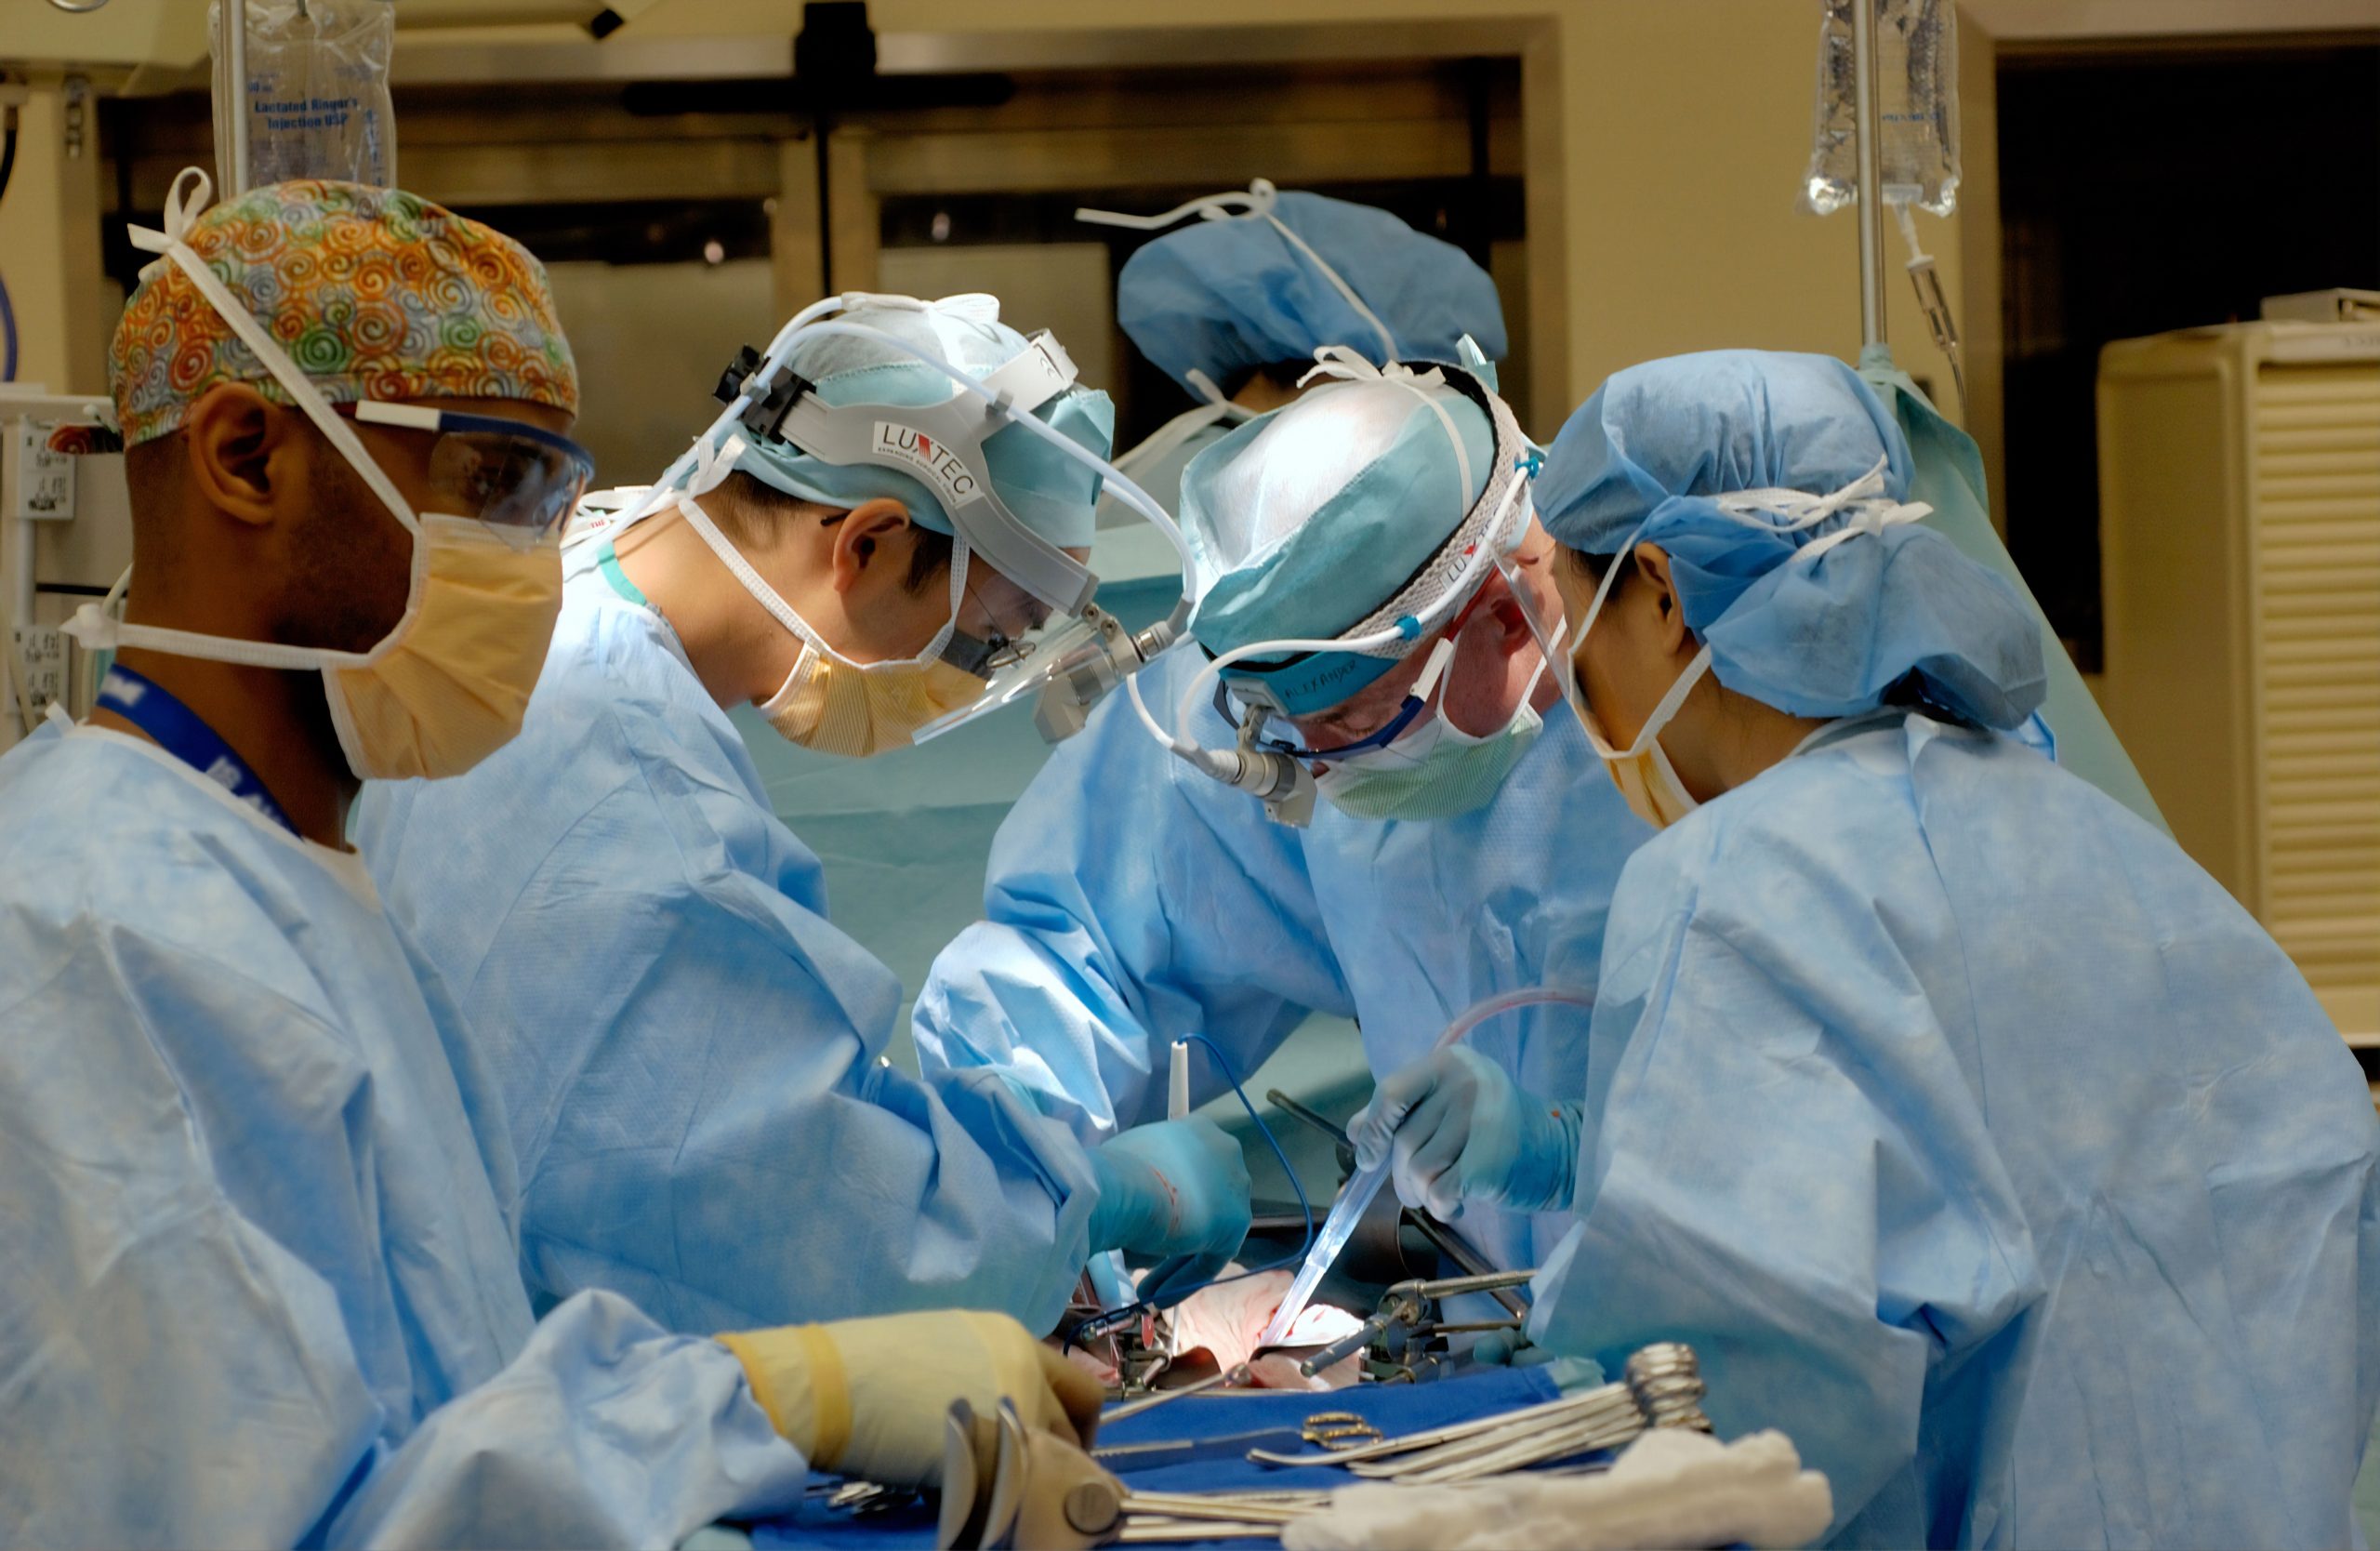 Medical professionals performing surgery